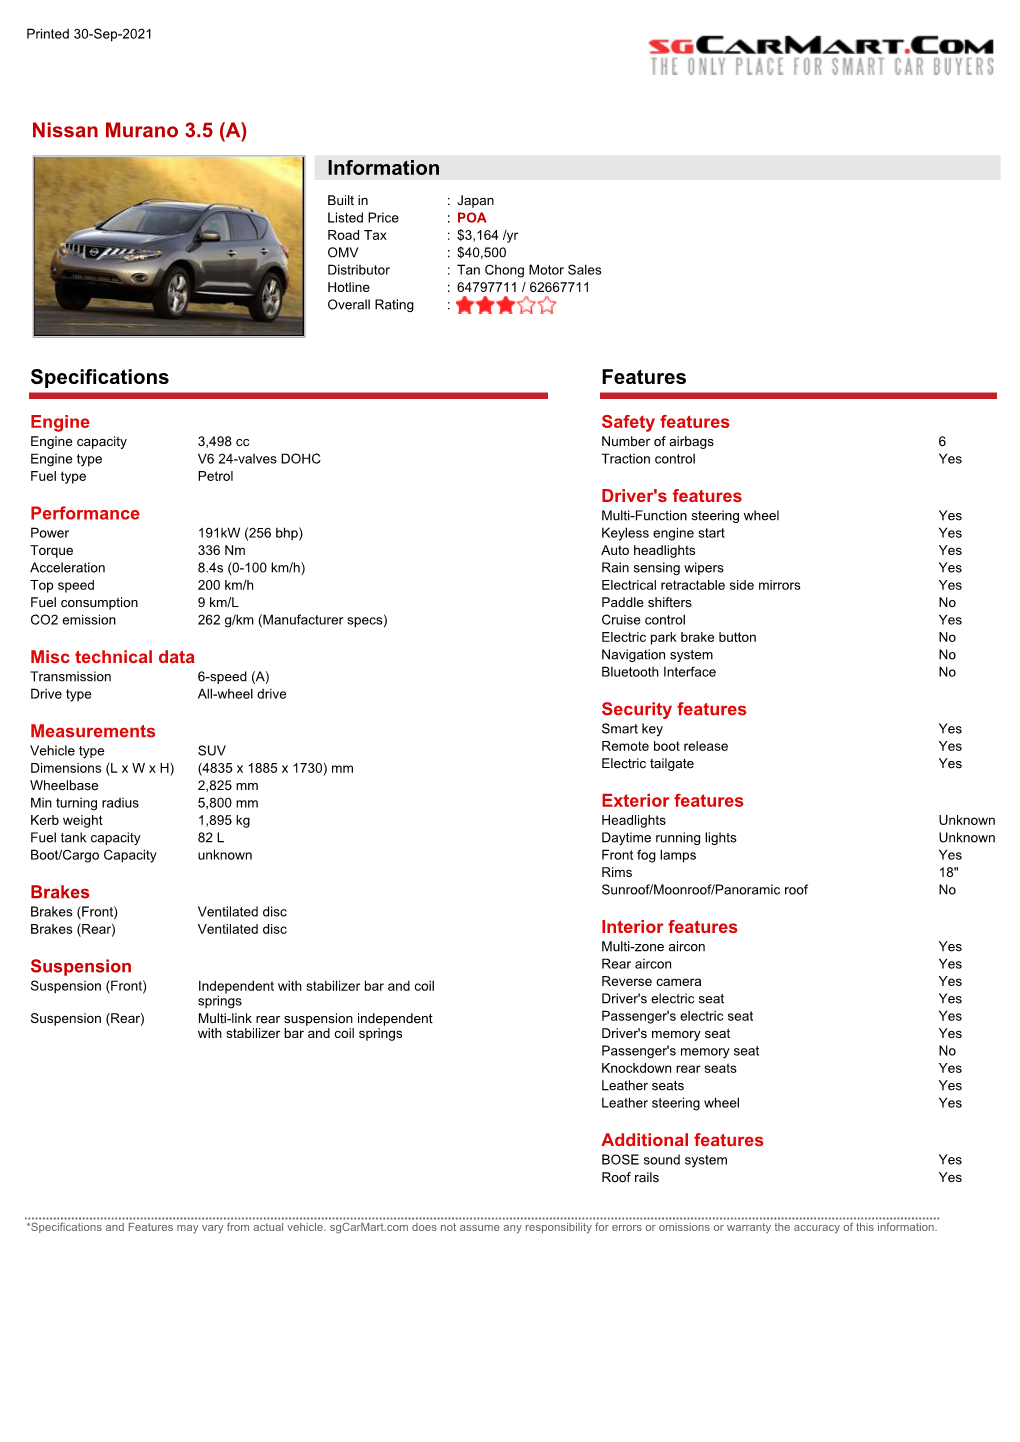 Nissan Murano 3.5 (A) Information